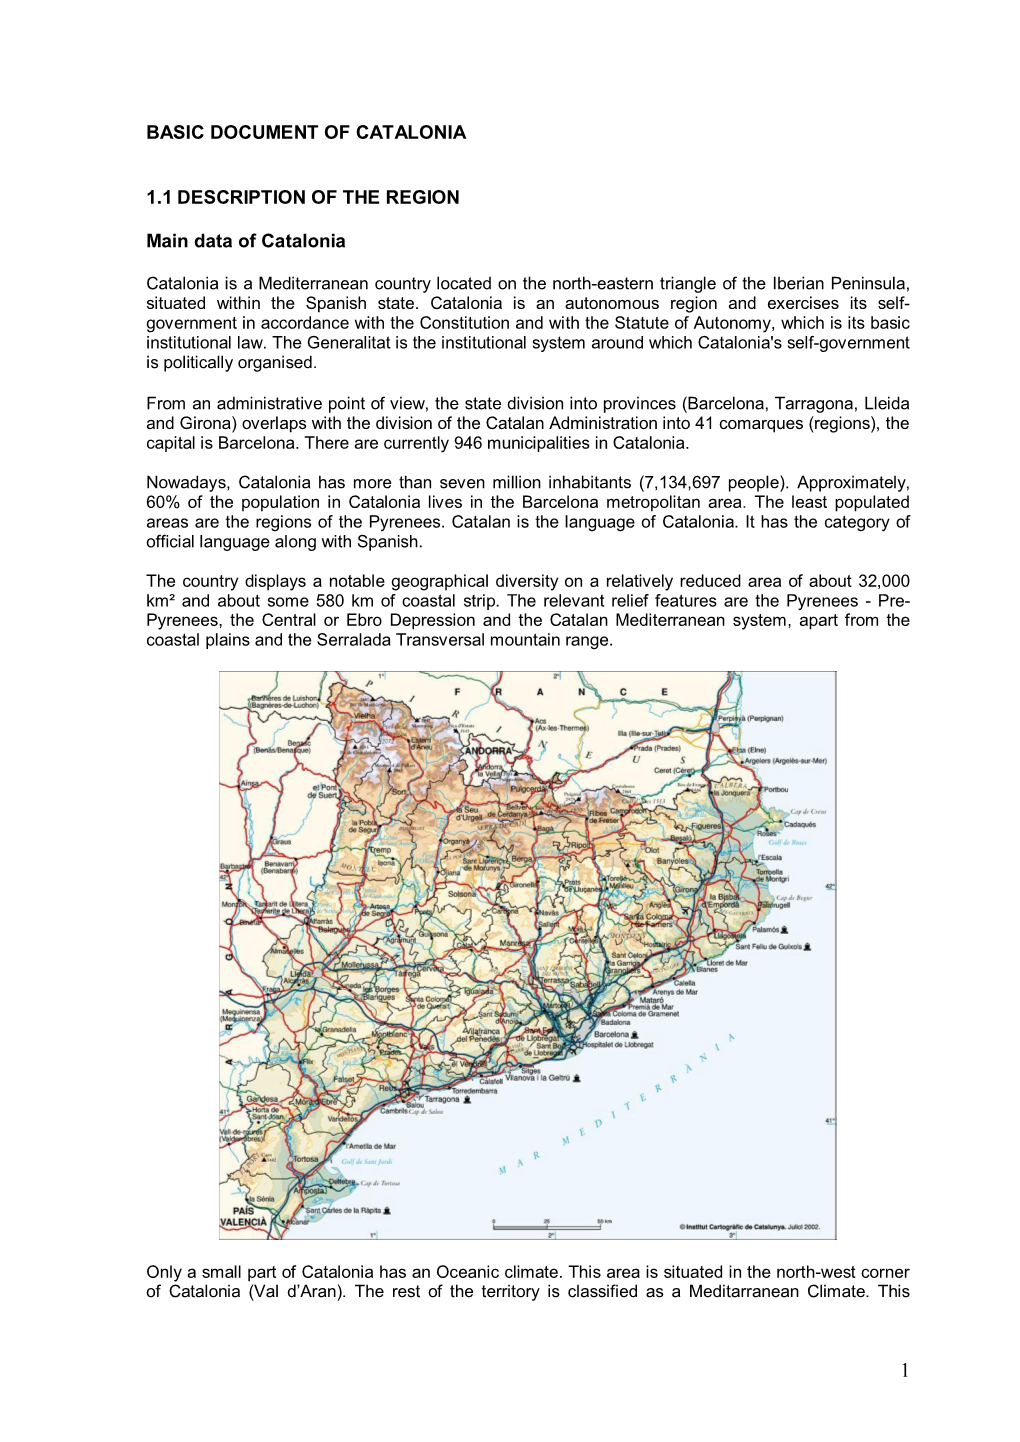 Basic Document of Catalonia 1.1 Description of The